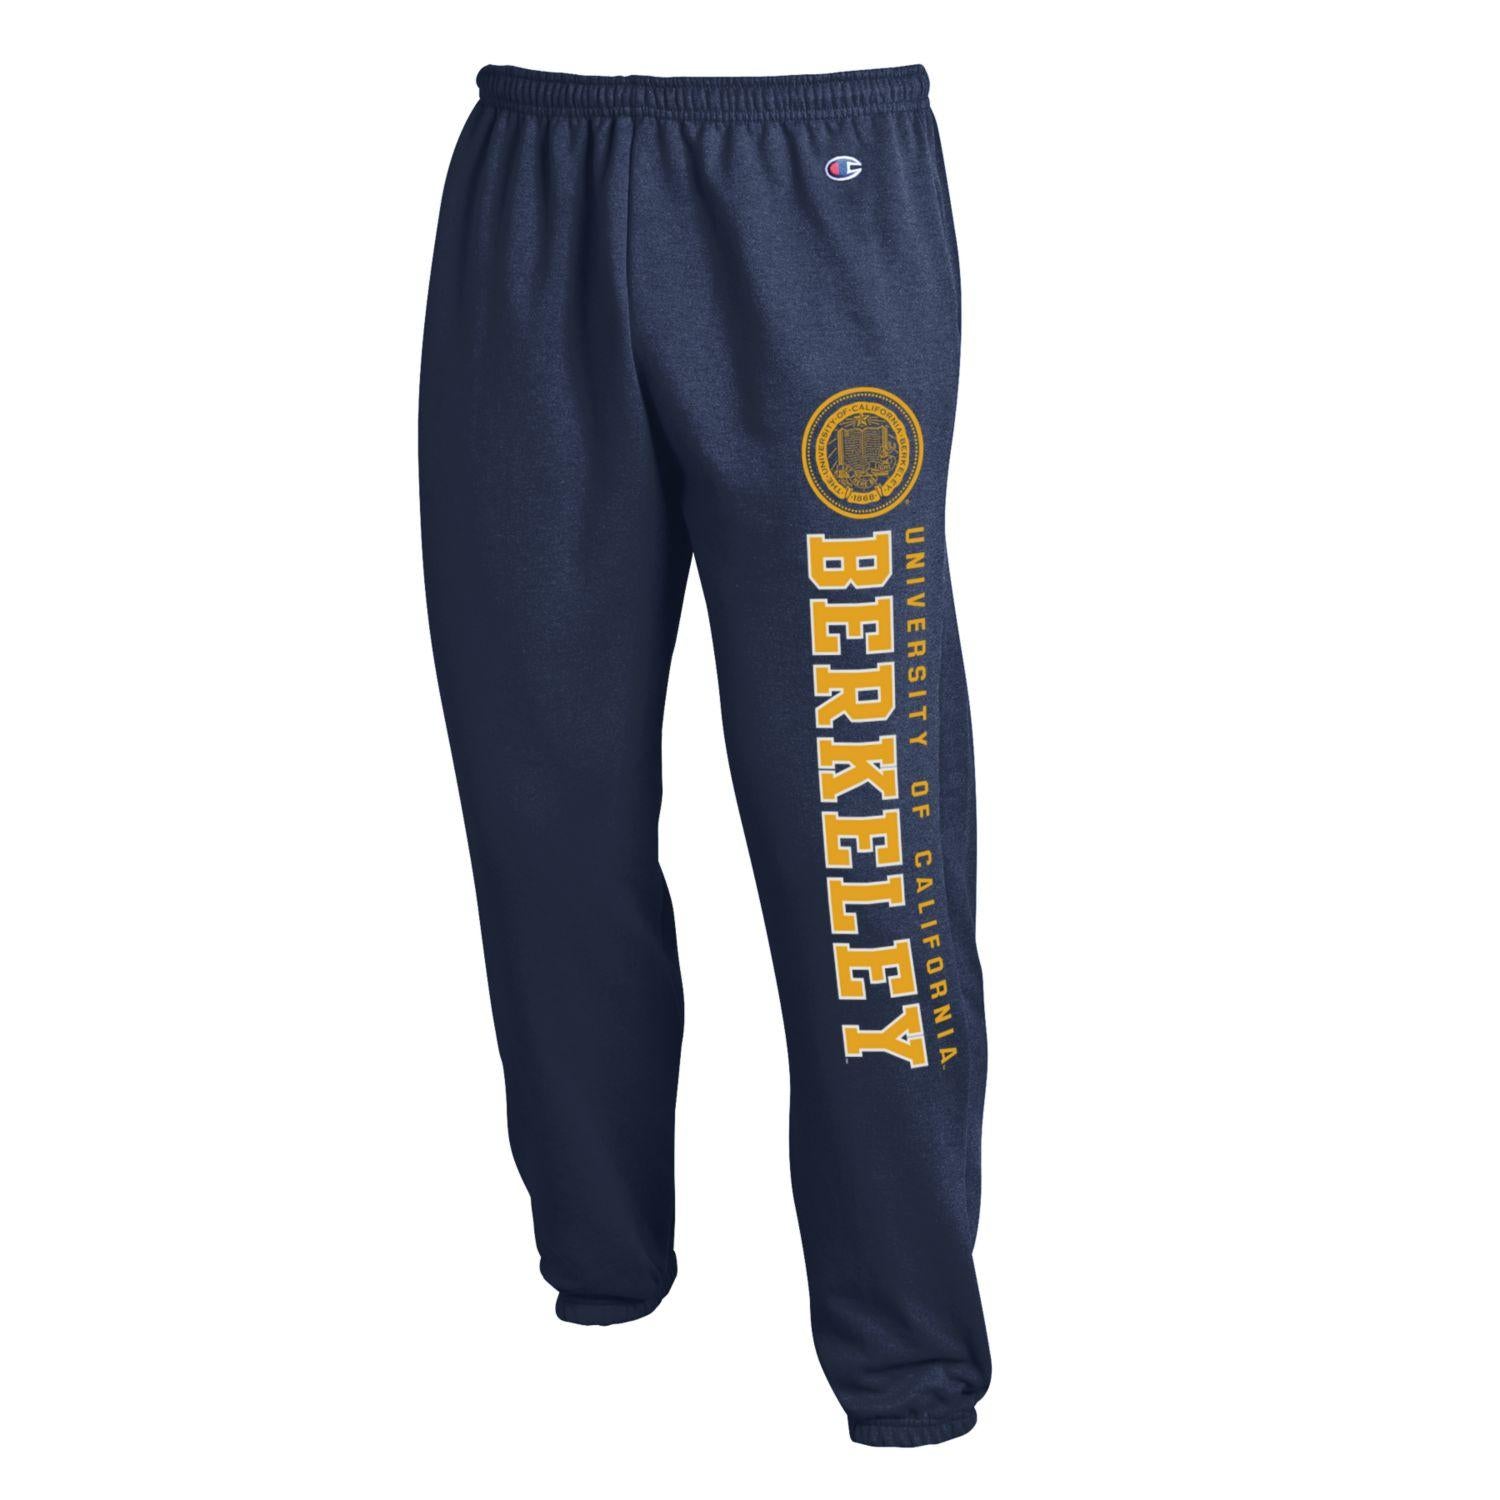 U.C. Berkeley Champion Men's banded bottom pants-Navy-Shop College Wear